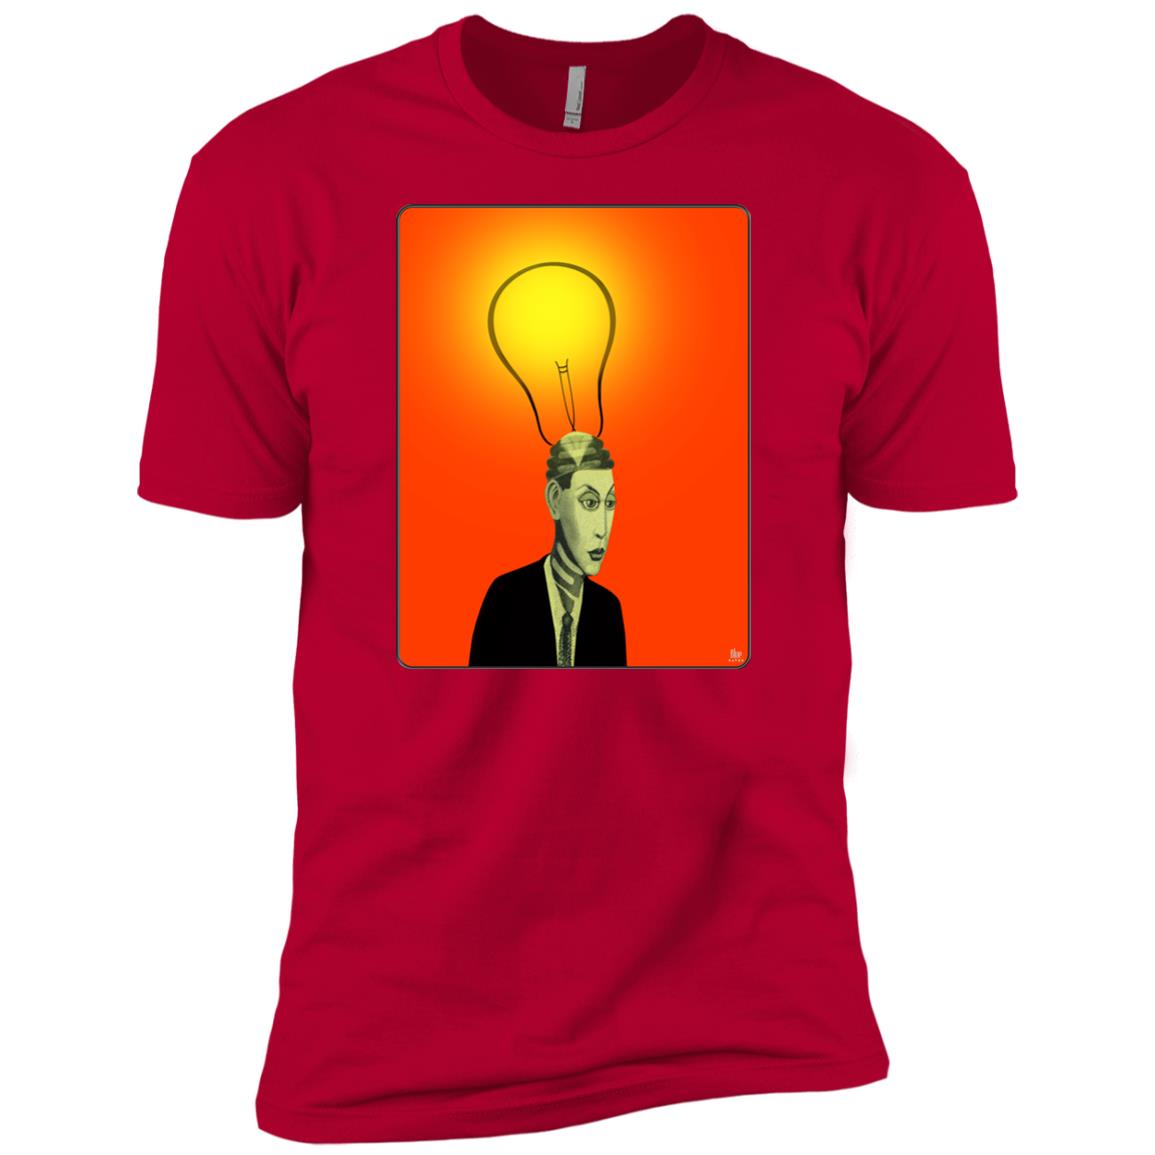 BRIGHT IDEA - Boy's Premium T-Shirt